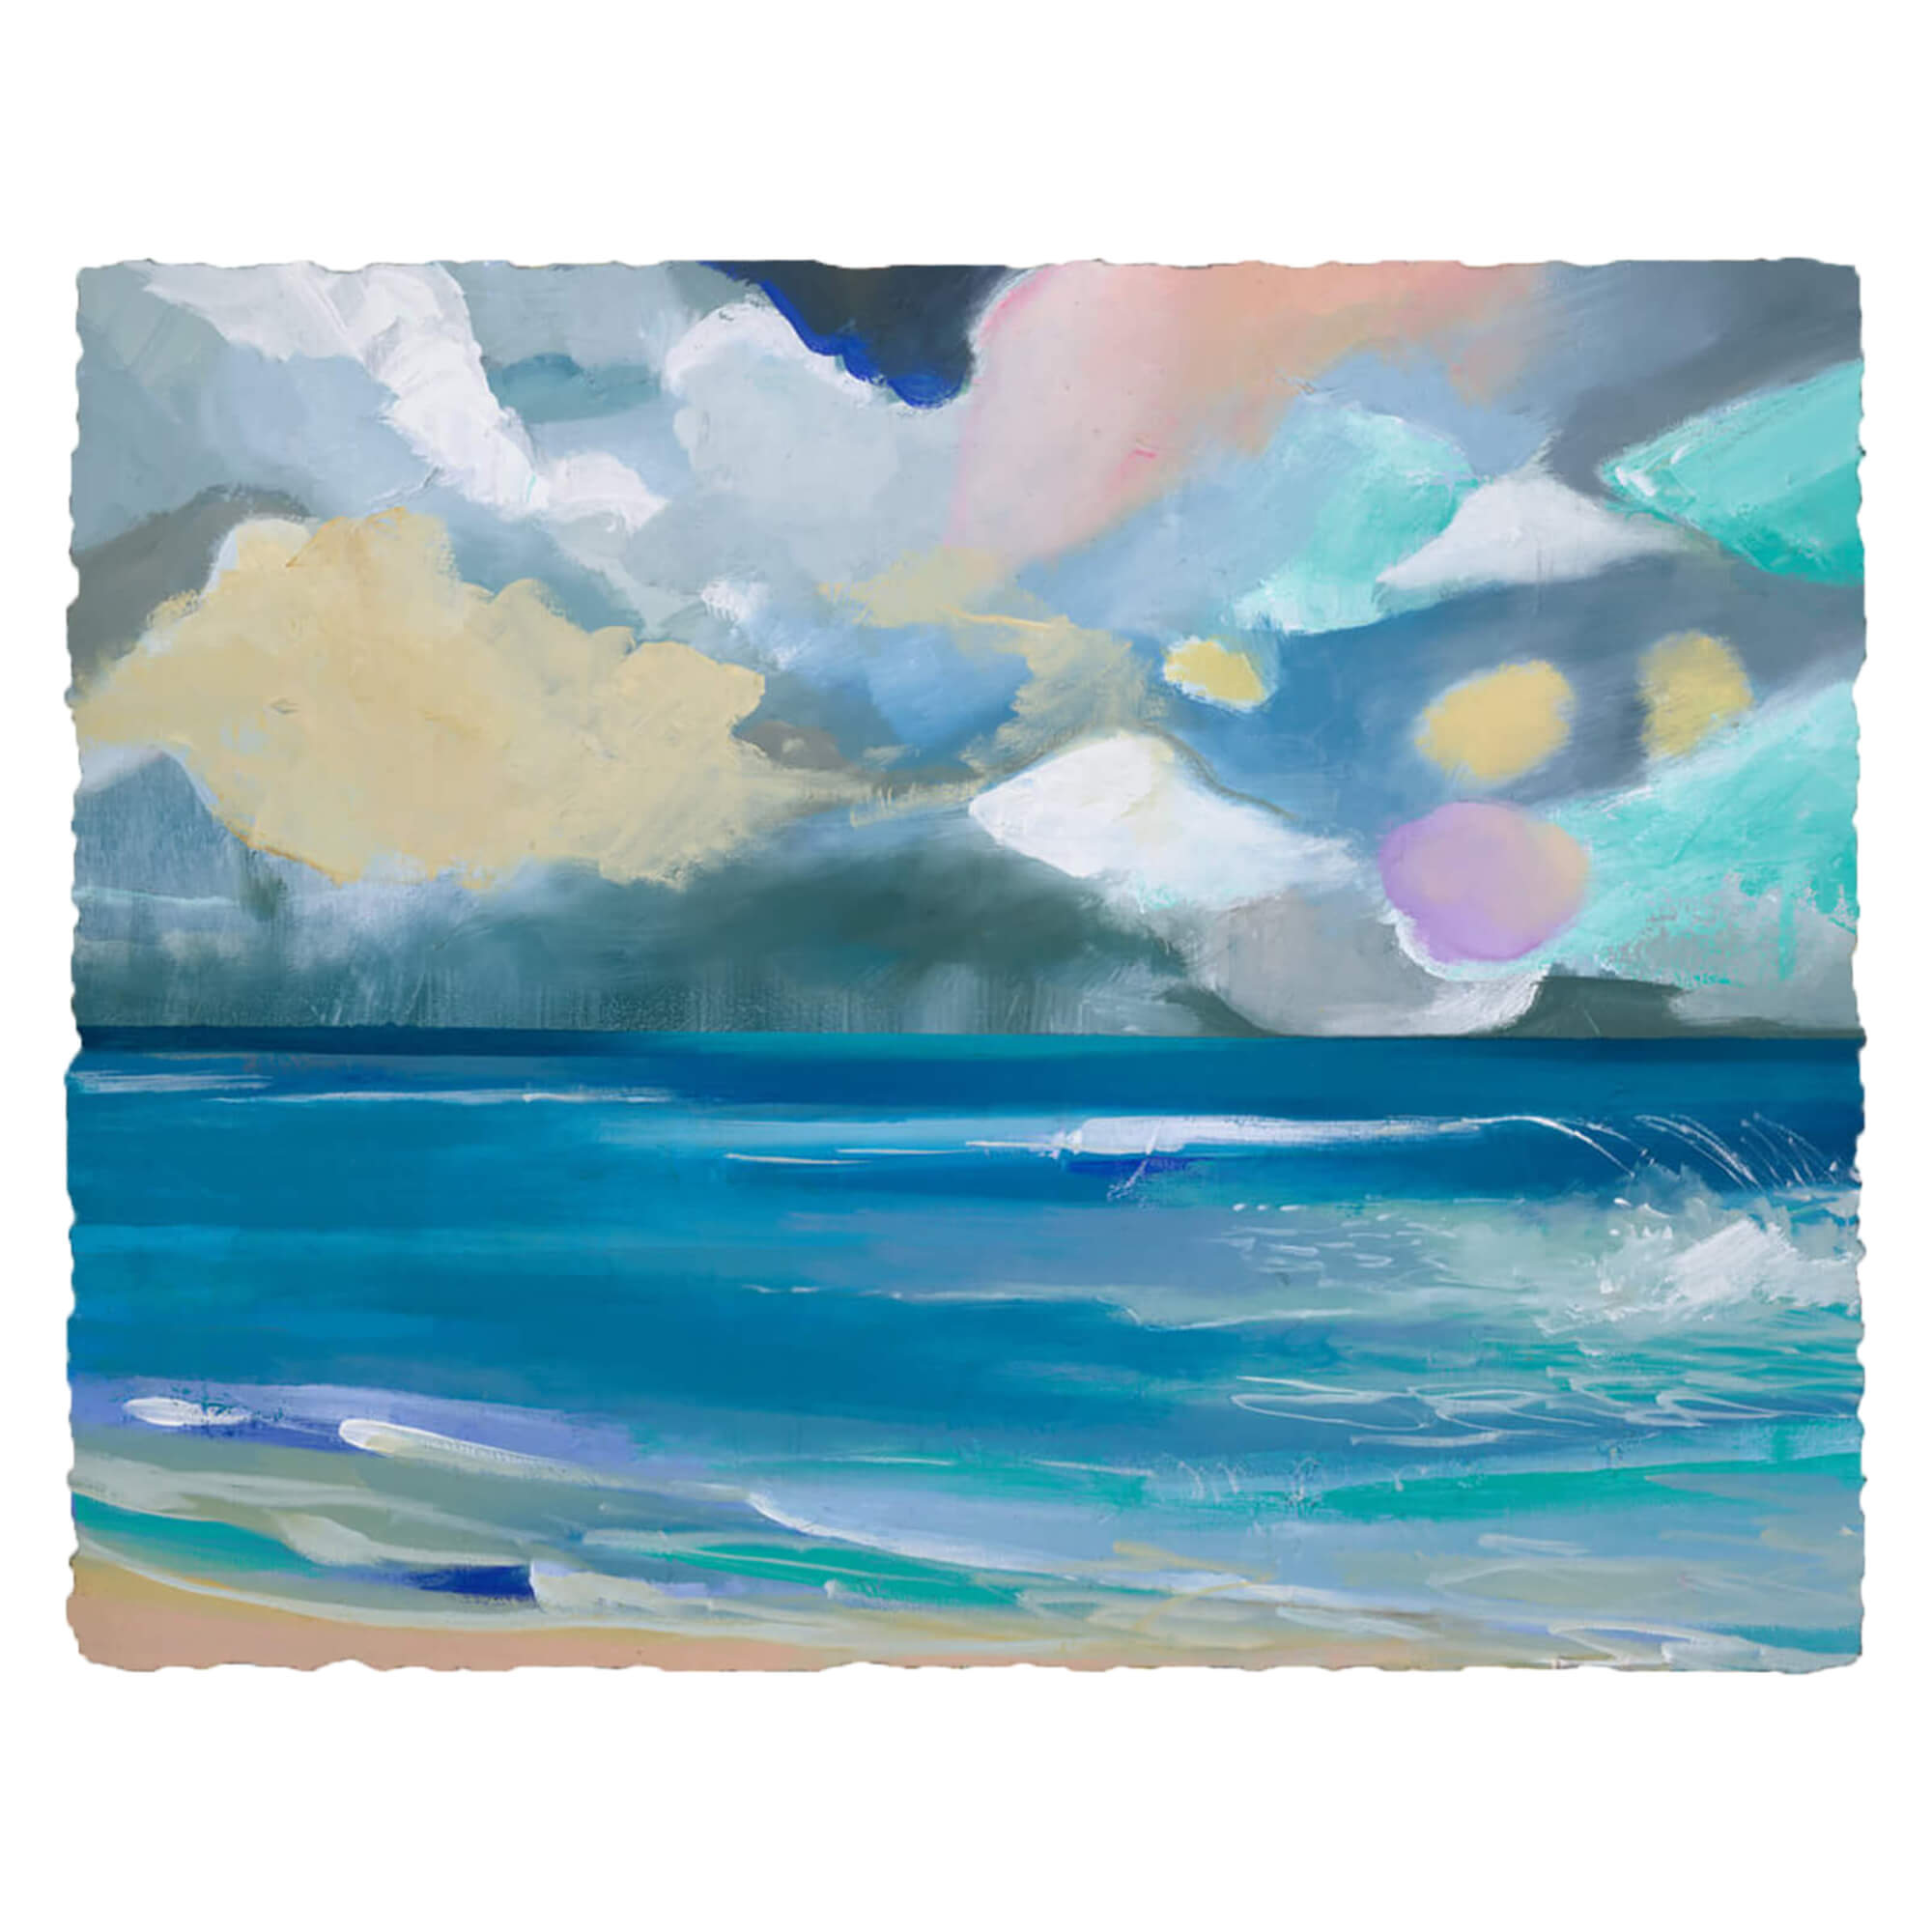 A deckled paper art print of a serene seascape by Hawaii artist Saumolia Puapuaga